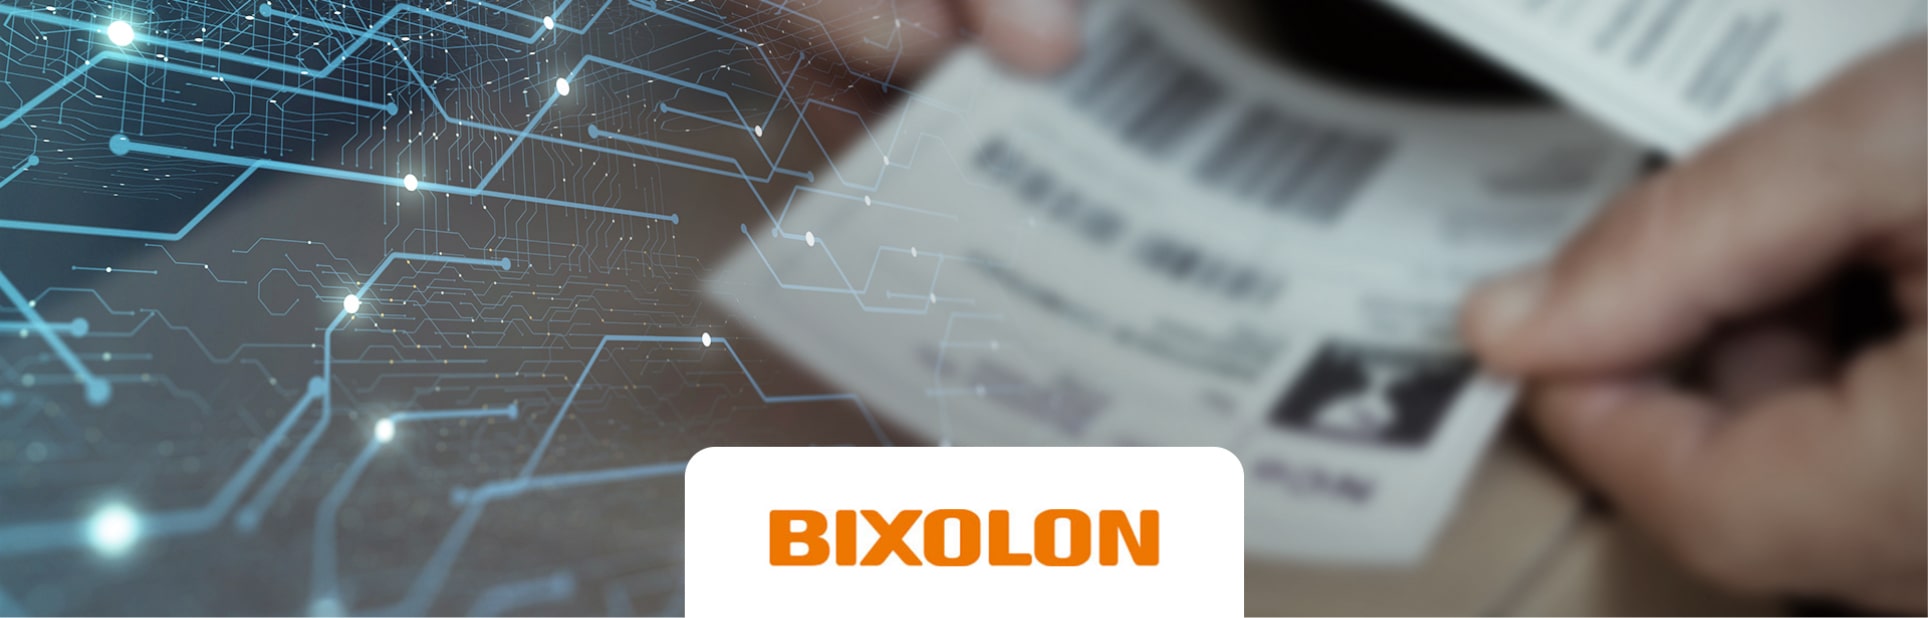 Bixolon product banner